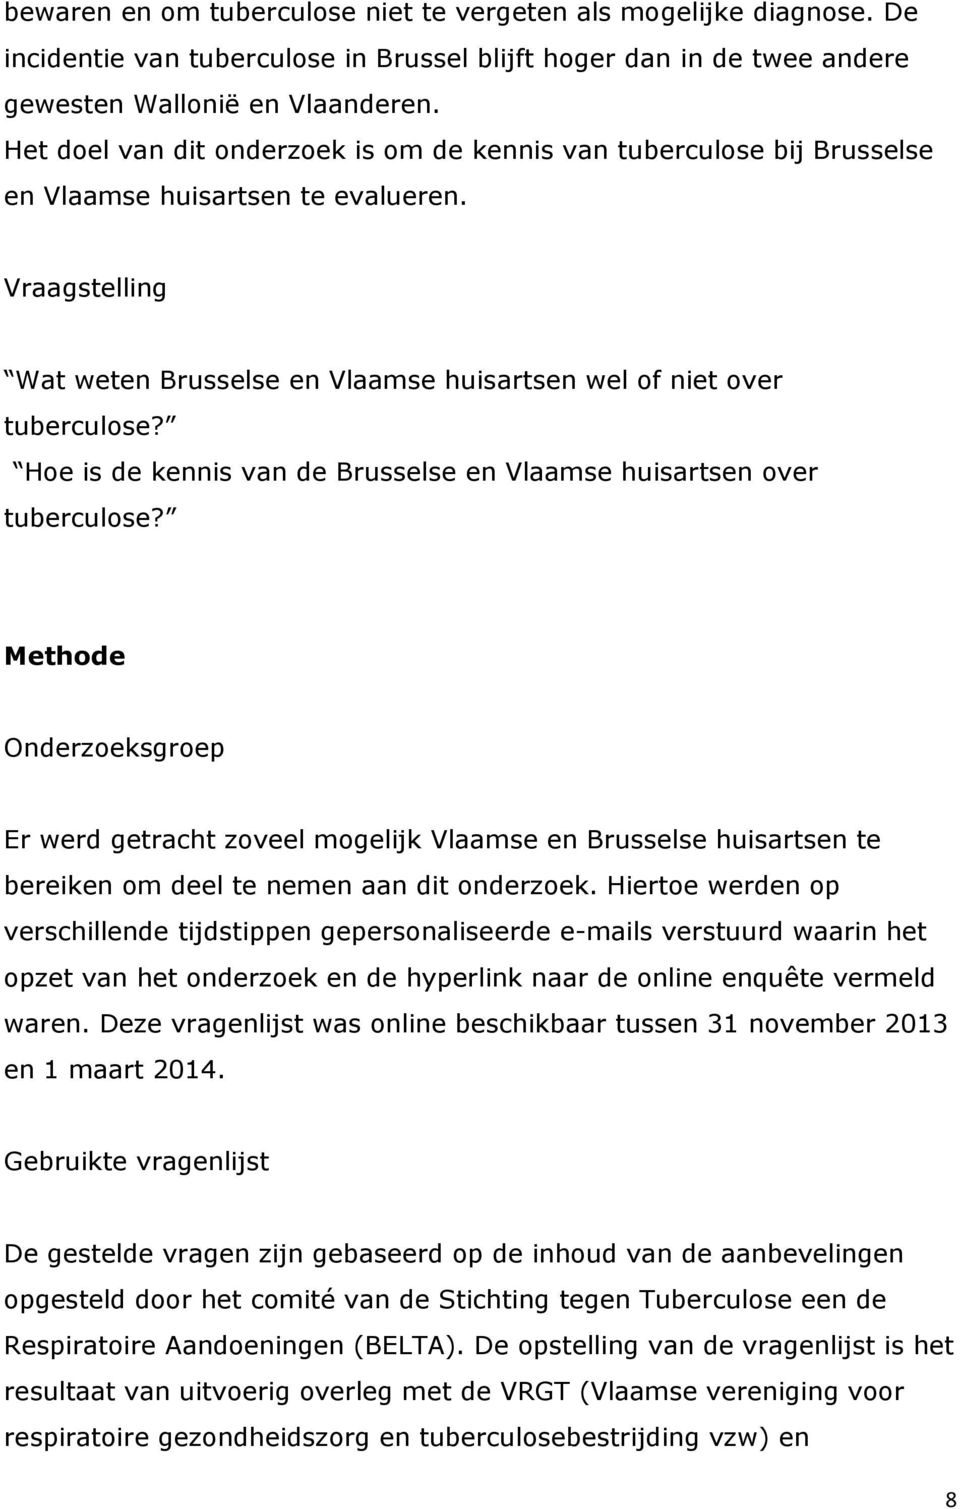 Hoe is de kennis van de Brusselse en Vlaamse huisartsen over tuberculose?